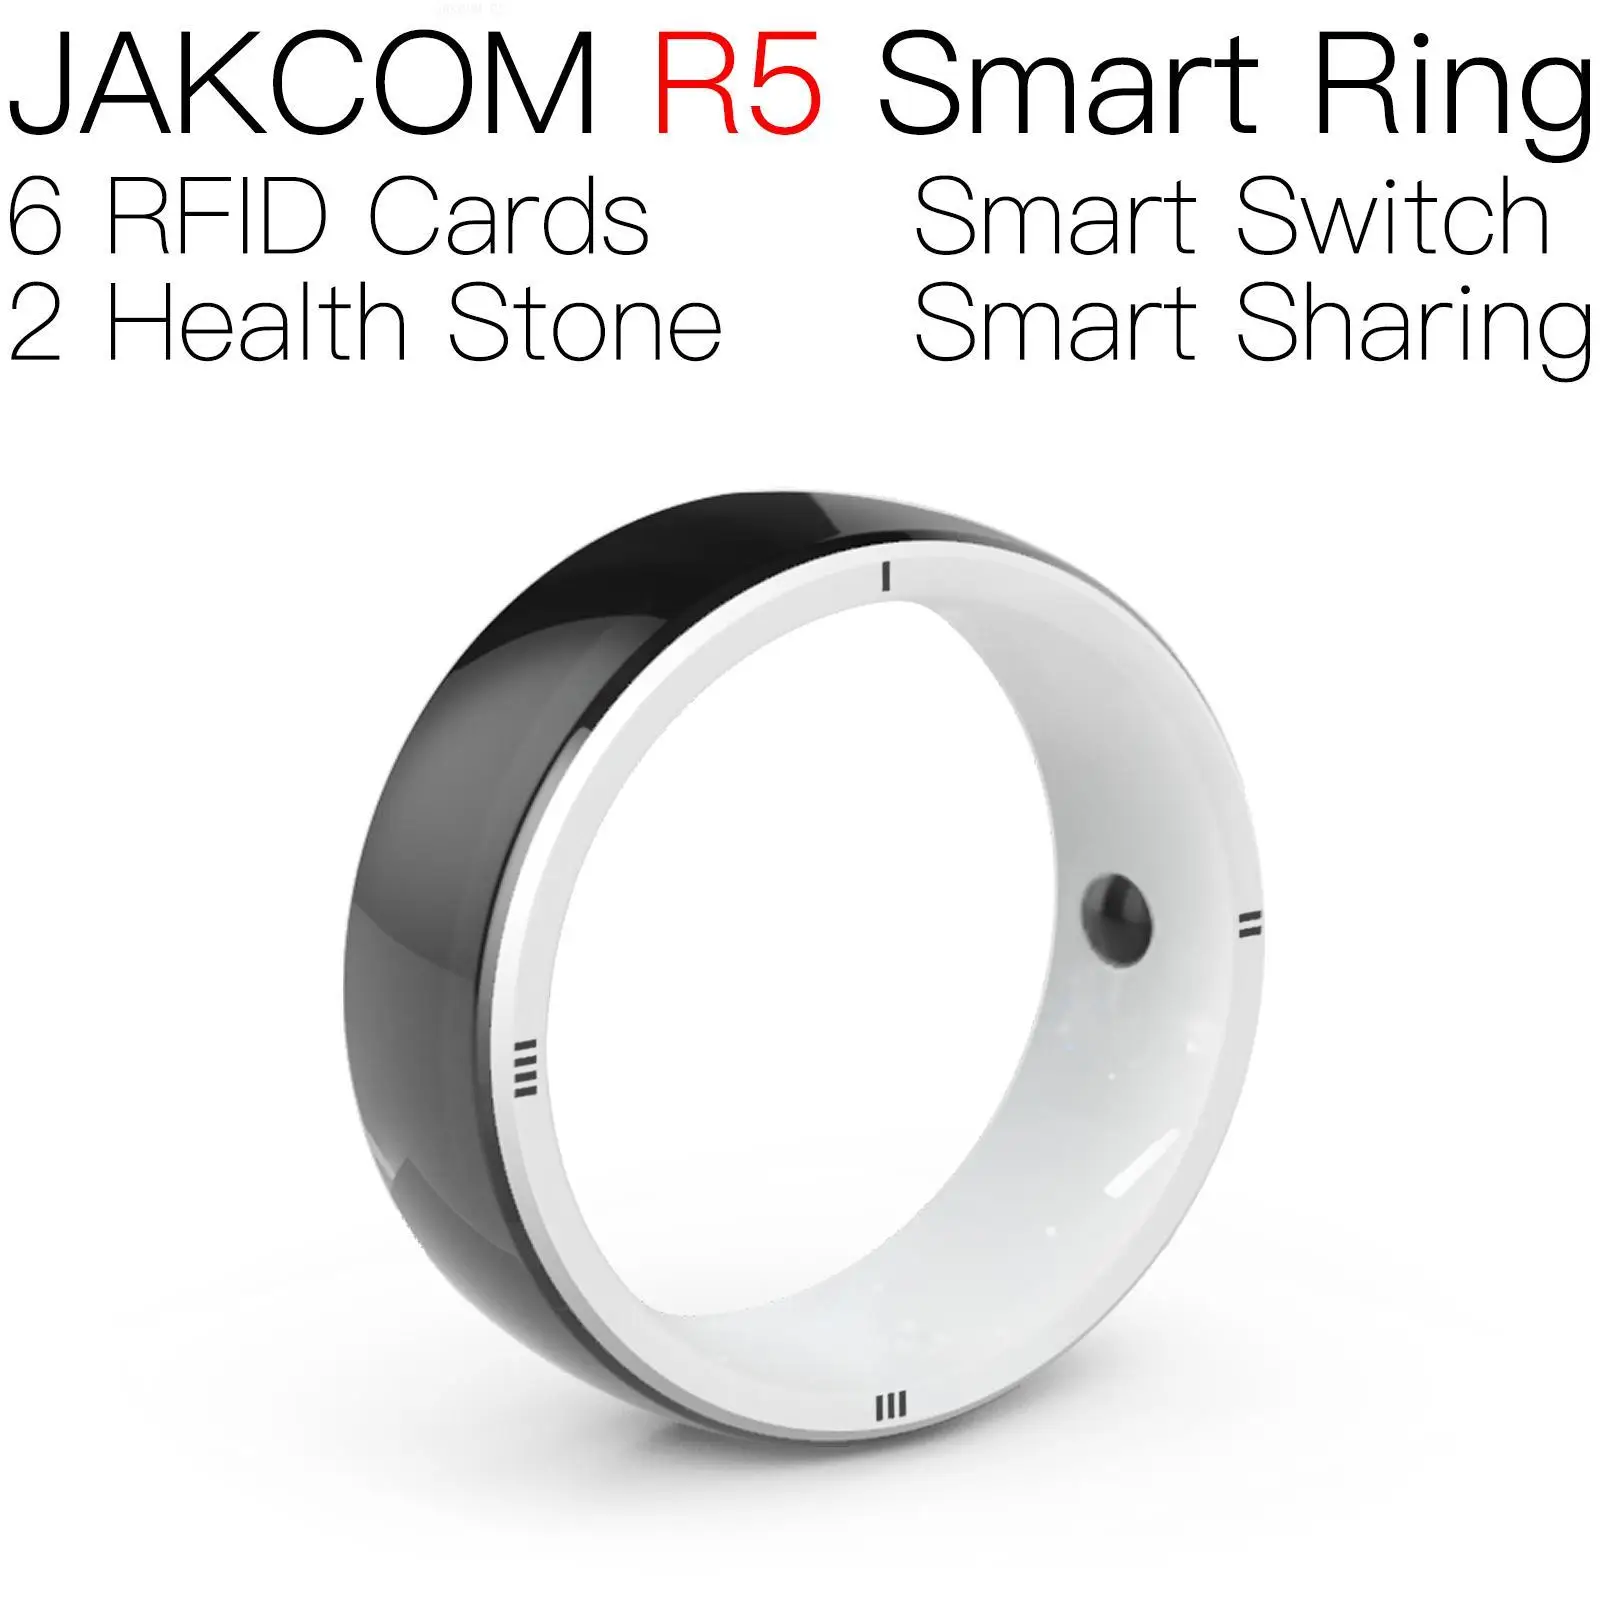 

JAKCOM R5 Smart Ring Super value than nfc form active rfid tag price new horizons misuzu uid rewritable cats rf